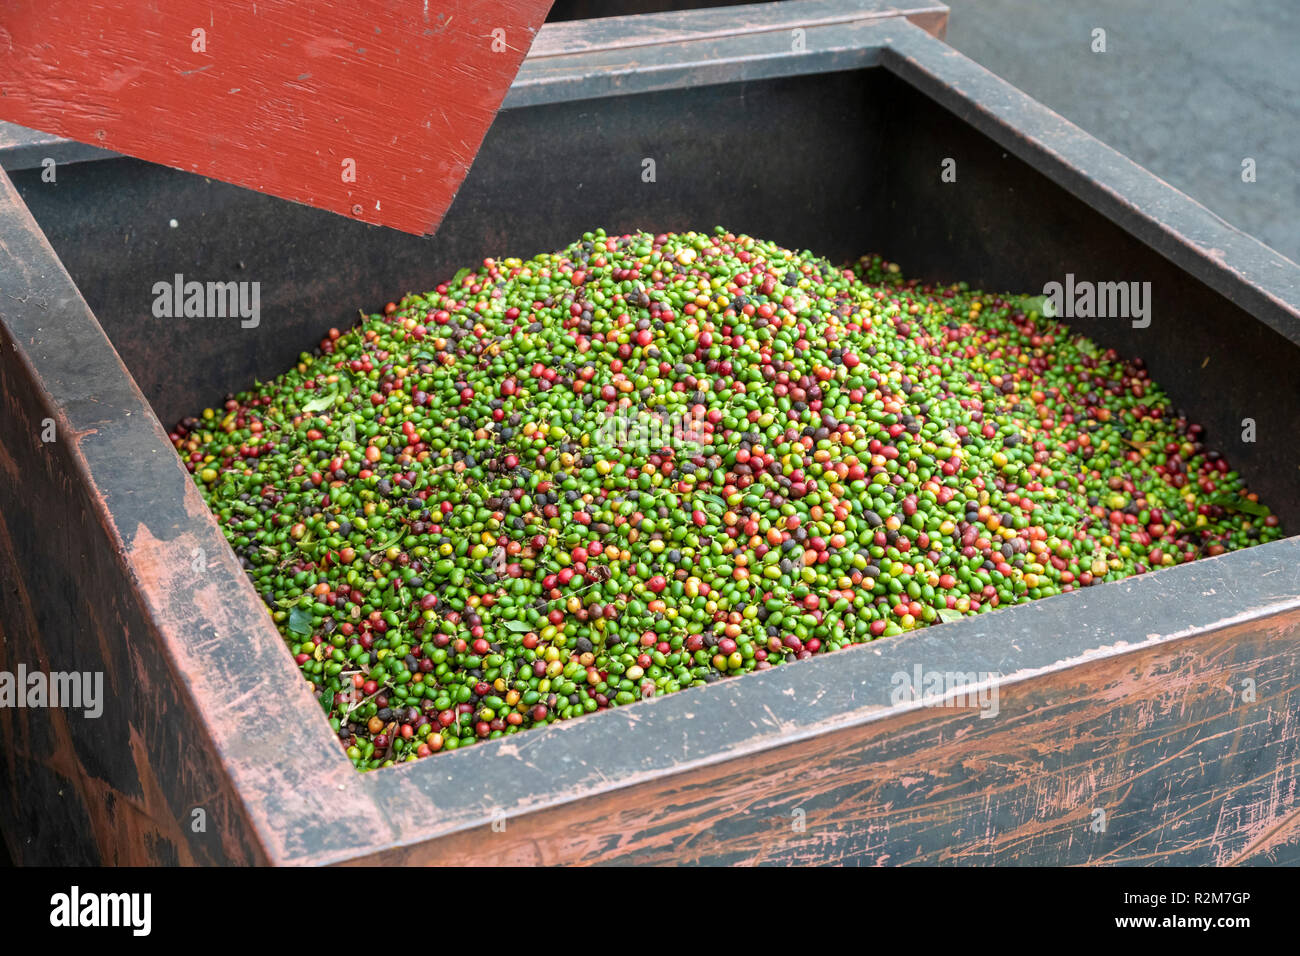 Captain Cook, Hawaii - Rote und grüne Kaffeebohnen (kaffeekirschen) im Royal Kona Kaffee Rösterei. Stockfoto